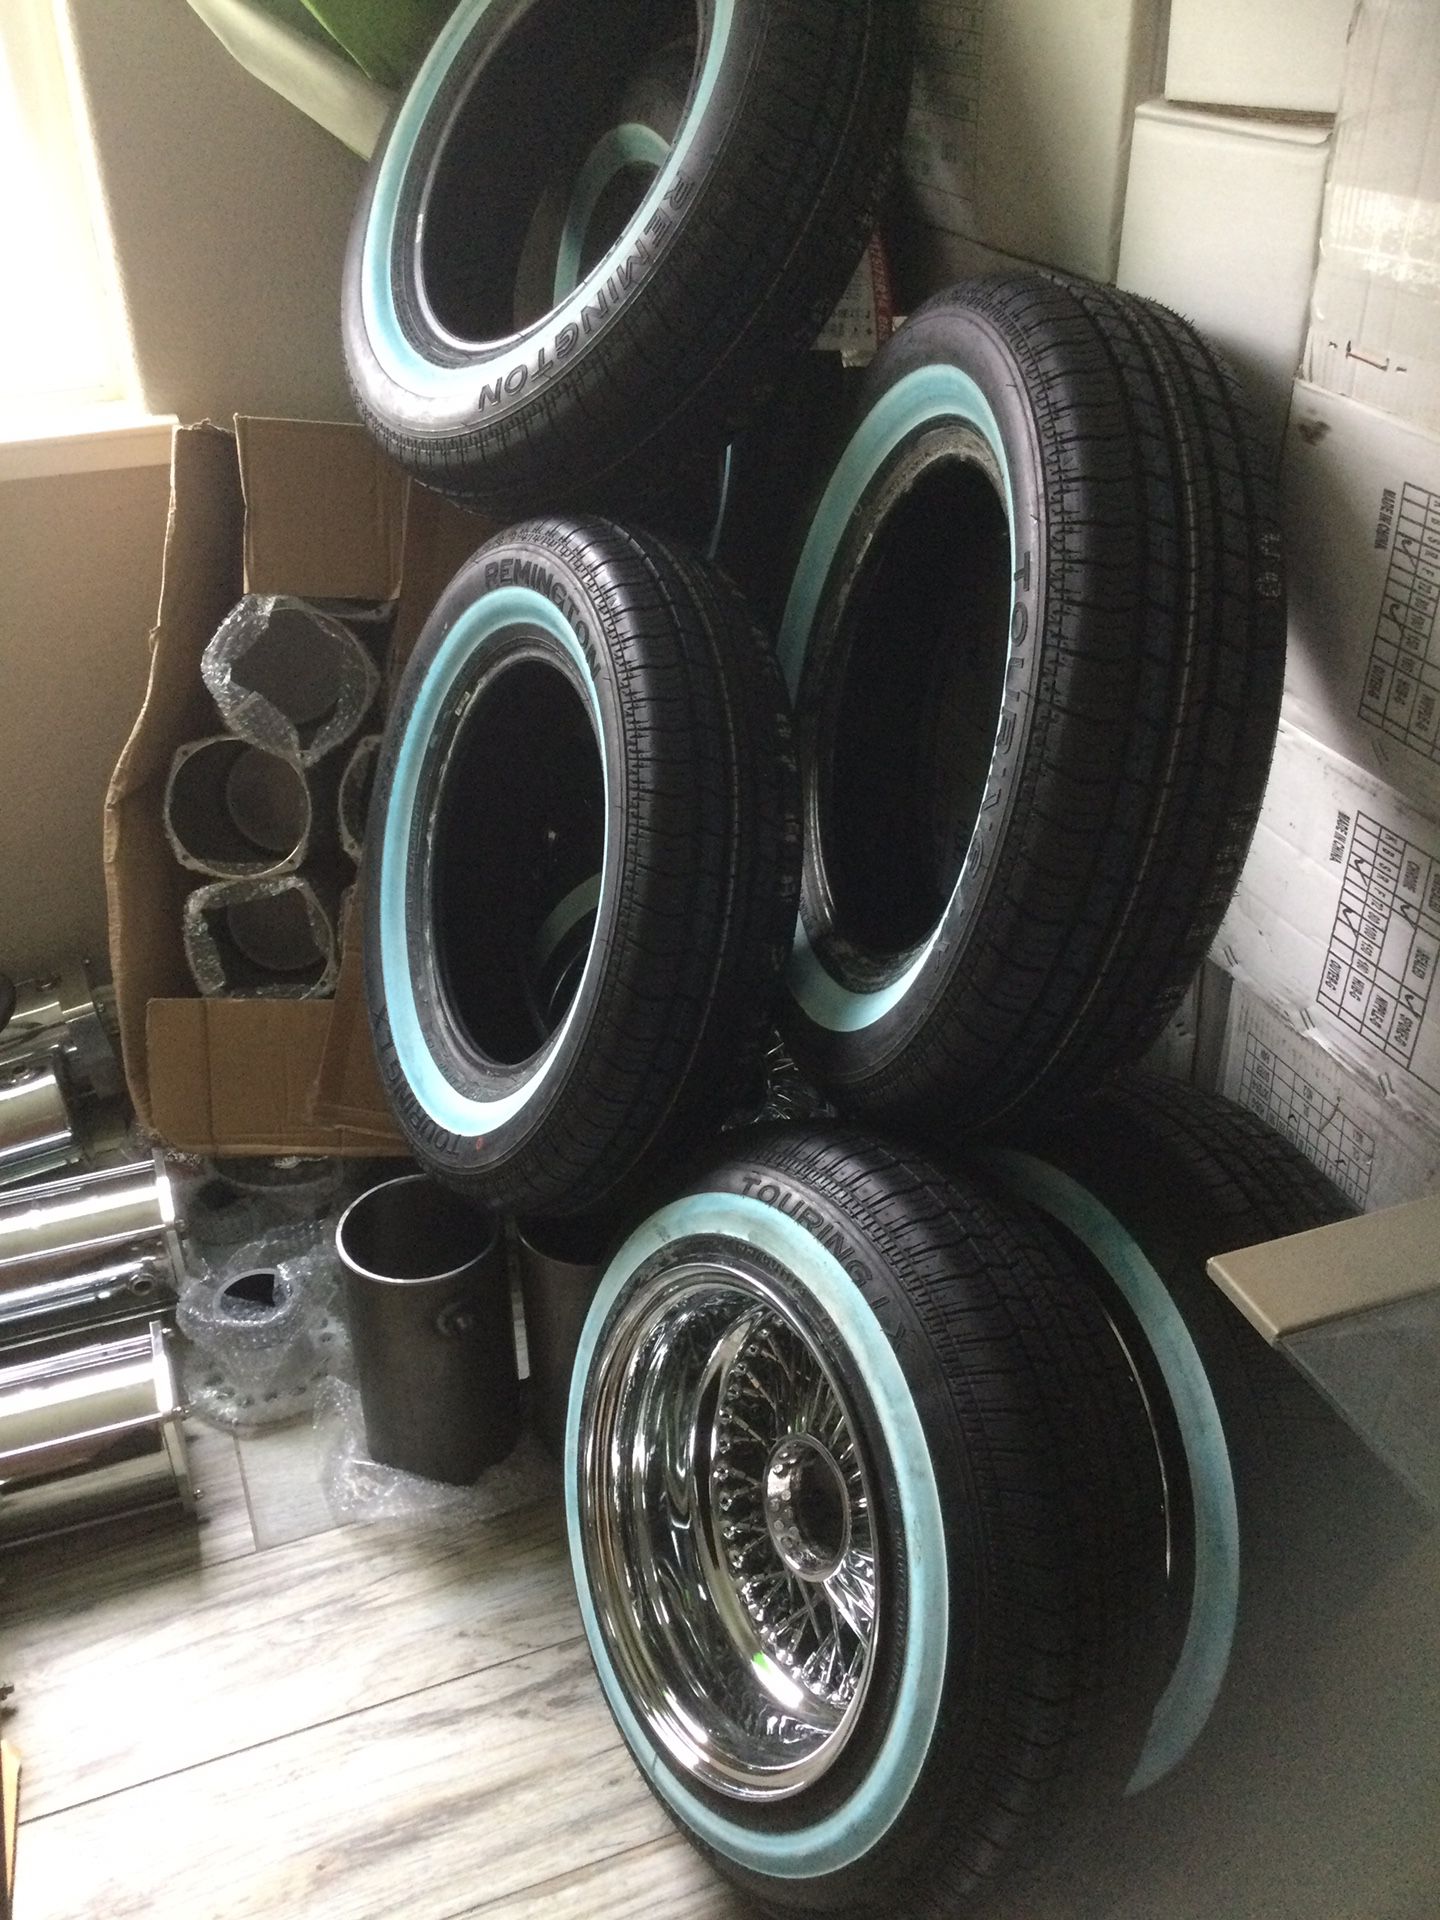 Wheels and tires  Custom  Rims  Hydraulic set ups